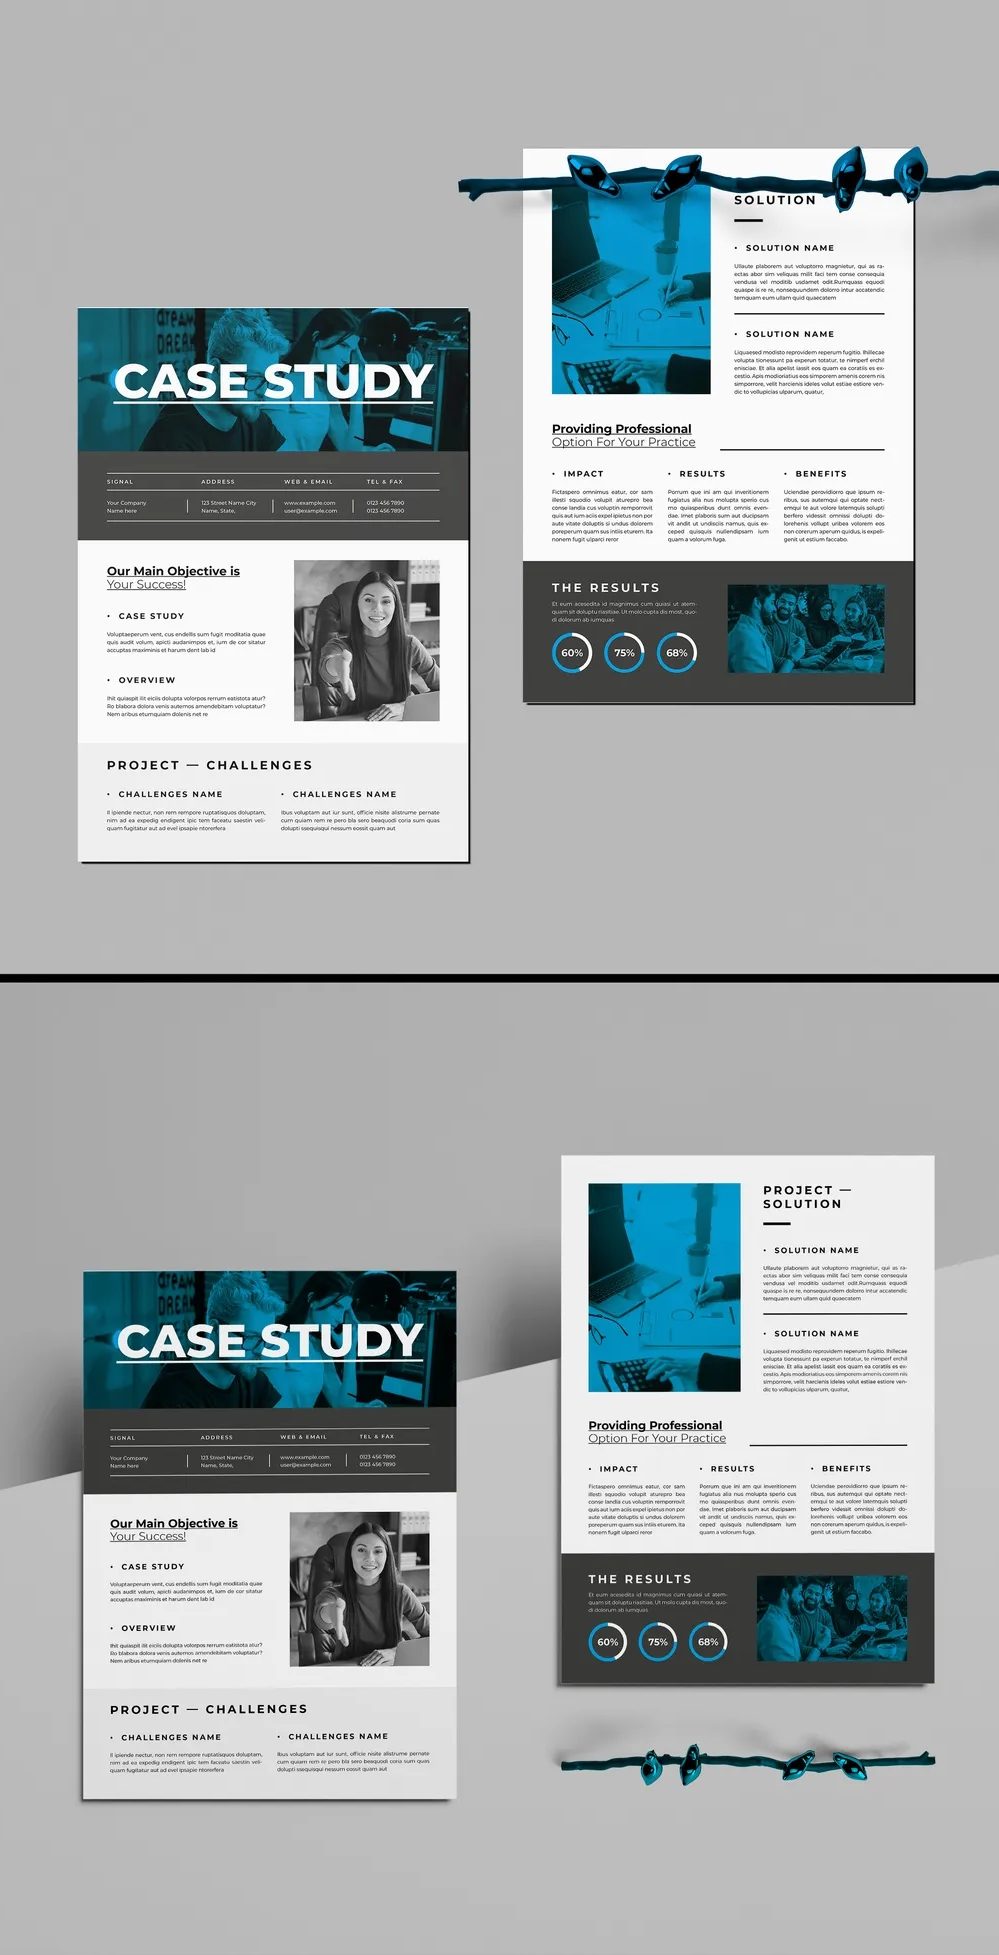 Adobestock - Case Study Template 721267533